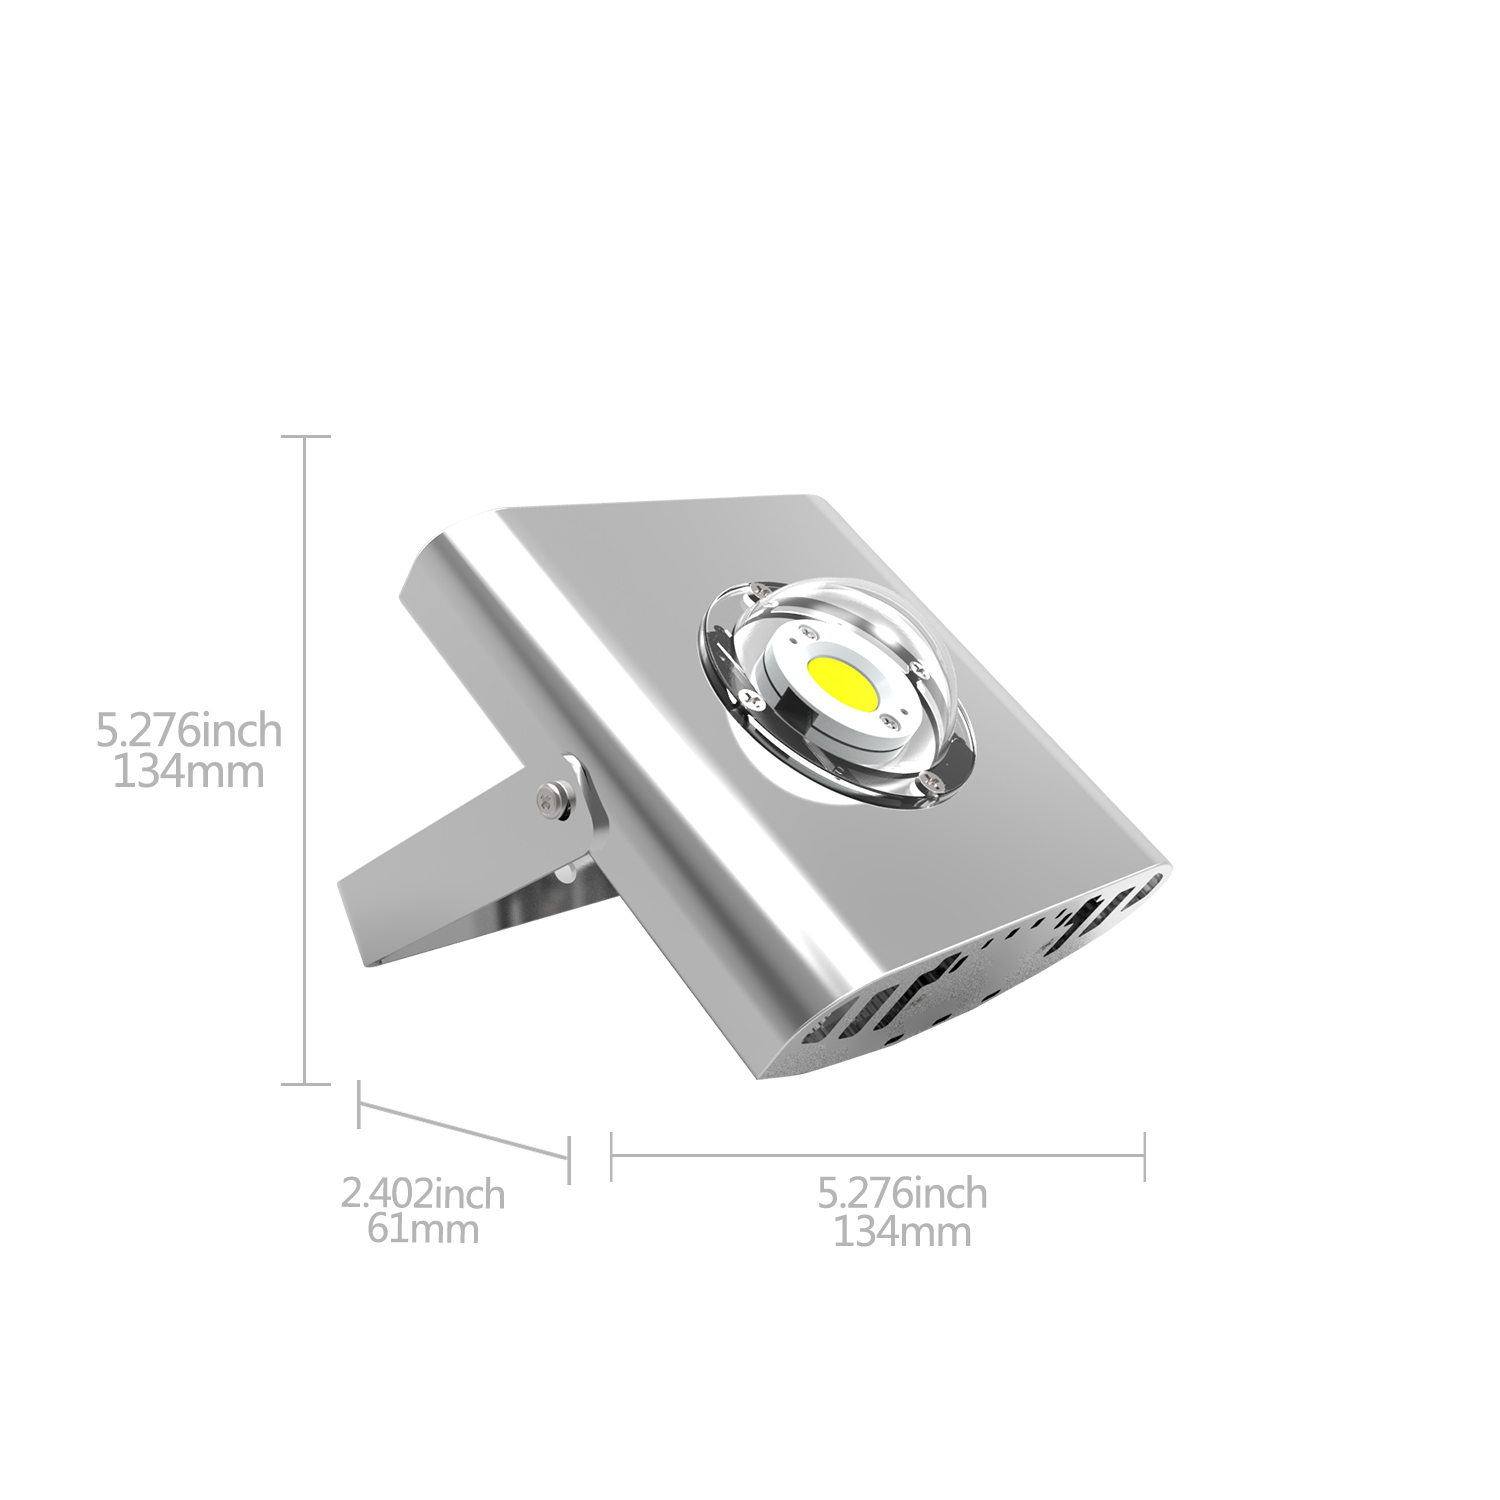 Aigostar - Confezione da 5 Faretto a LED COB，30W, 2700LM，Impermeabile IP65, Luce Naturale 4000K[Classe di efficienza energetica A+]